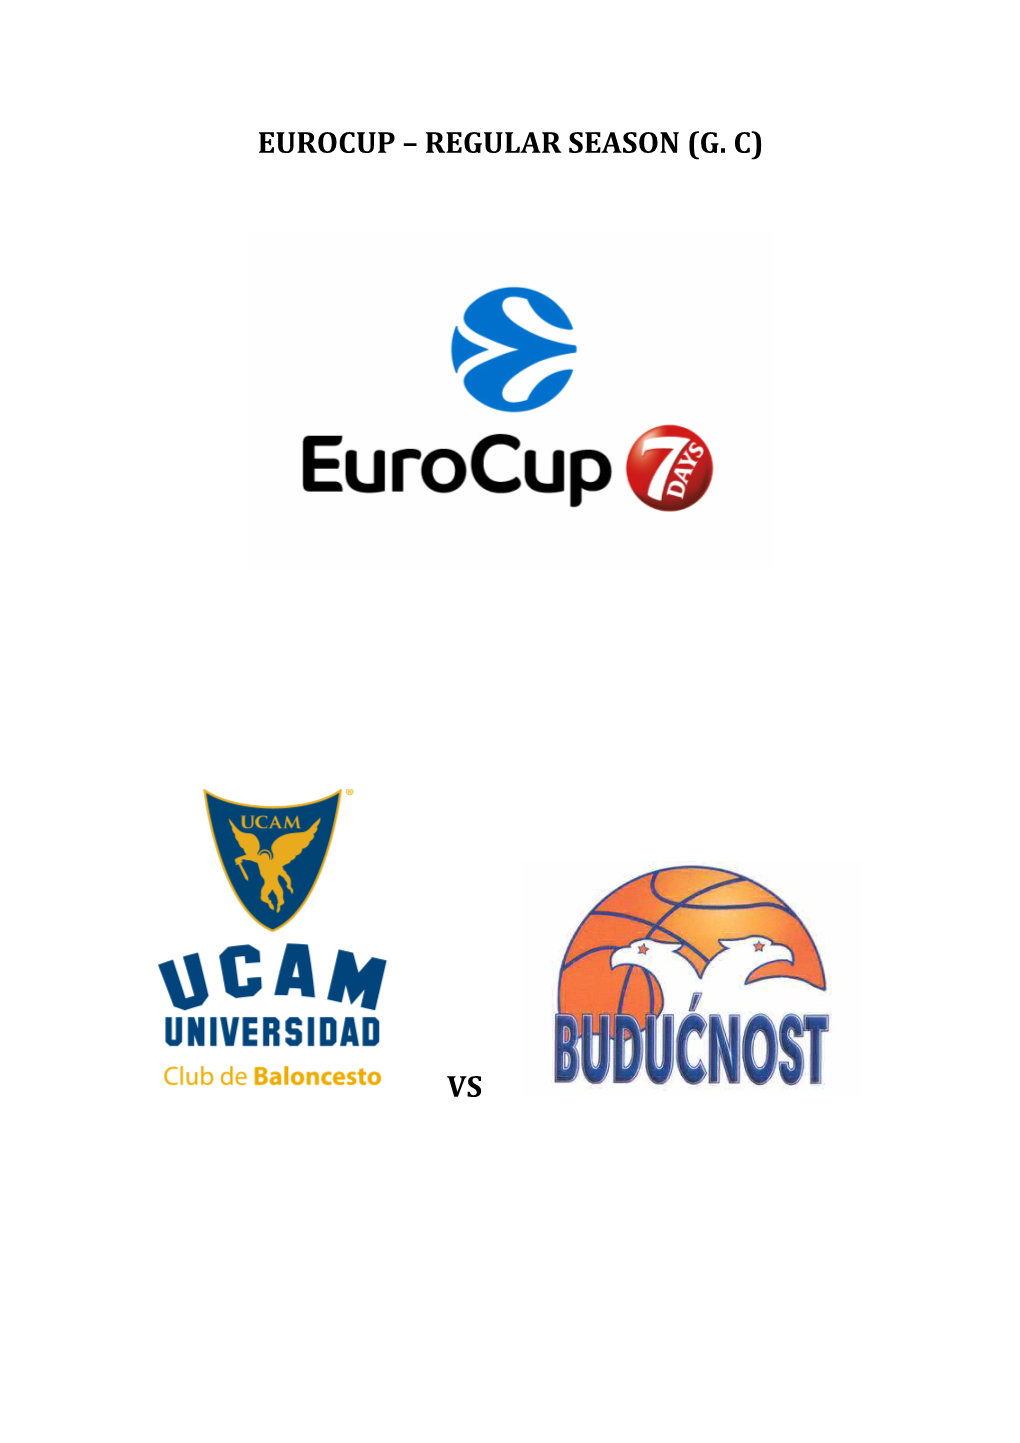 Eurocup – Regular Season (G. C) Vs